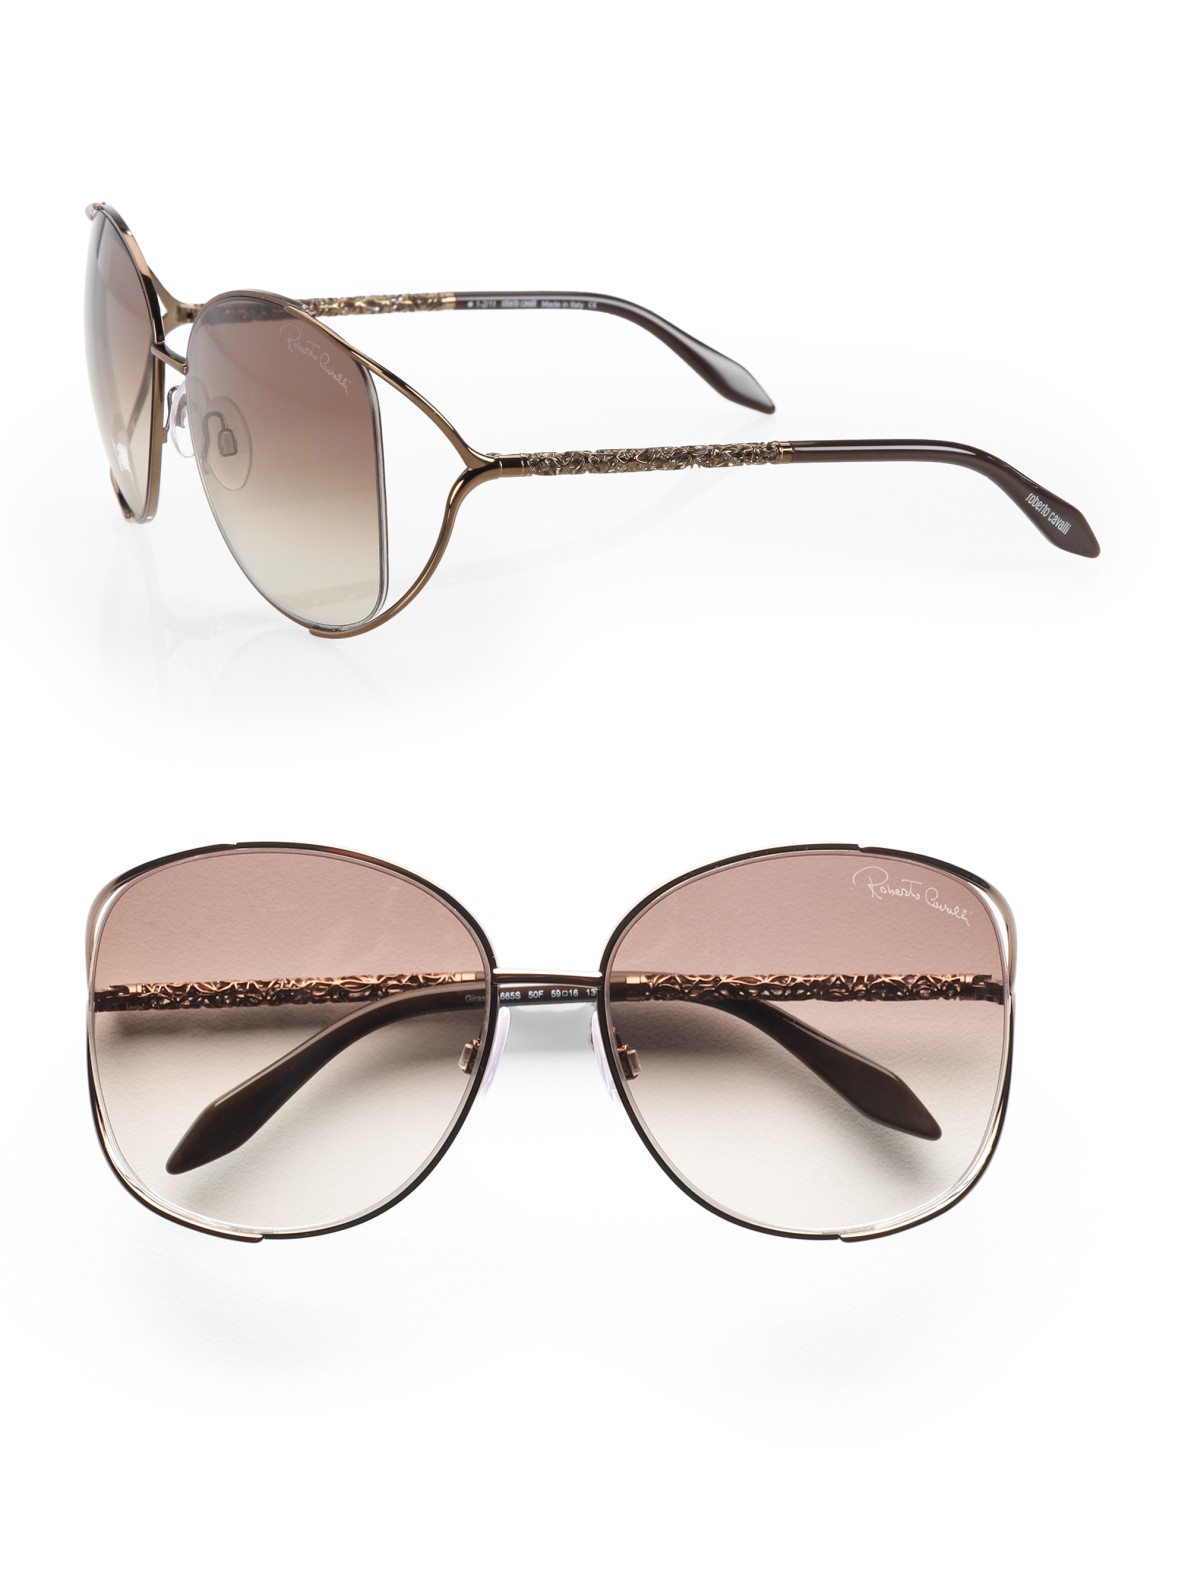 Lyst - Roberto Cavalli Girasole Square Metal Sunglasses/brown in Brown